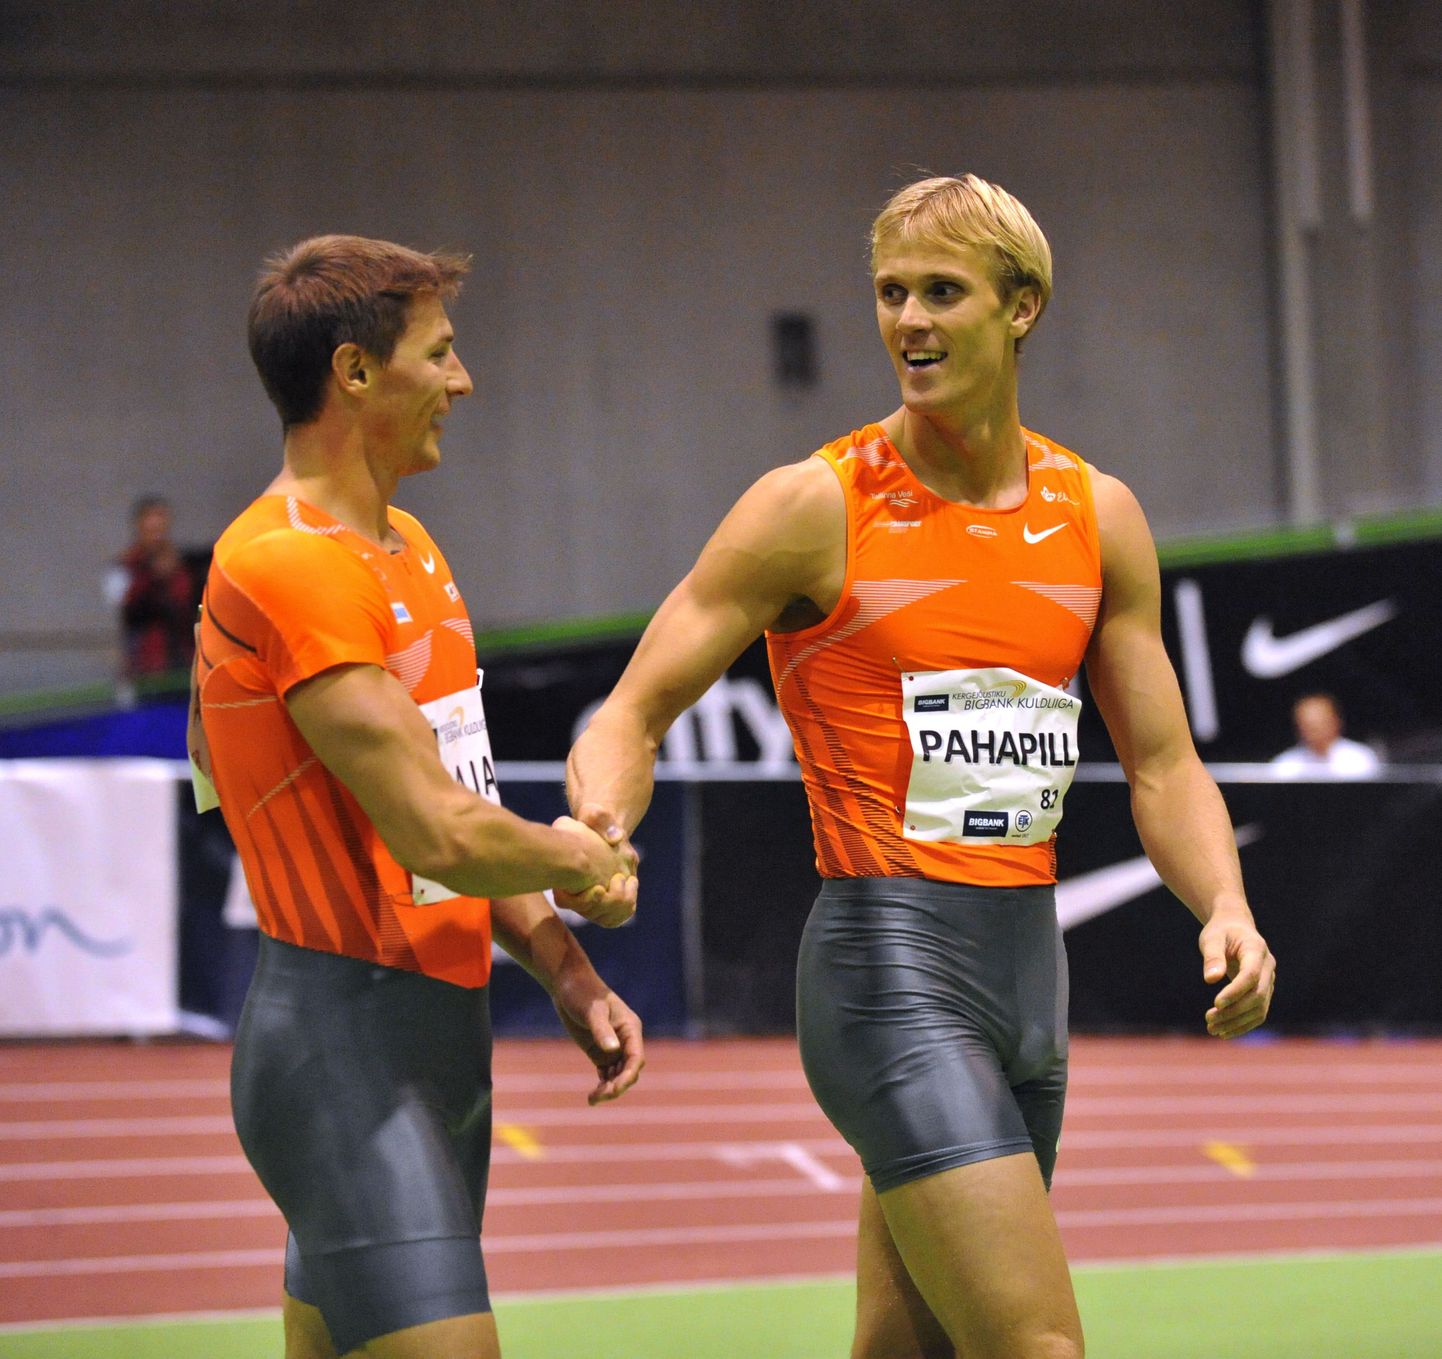 Andres Raja (vasakul) ja Mikk Pahapill Lasnamäe spordihallis.